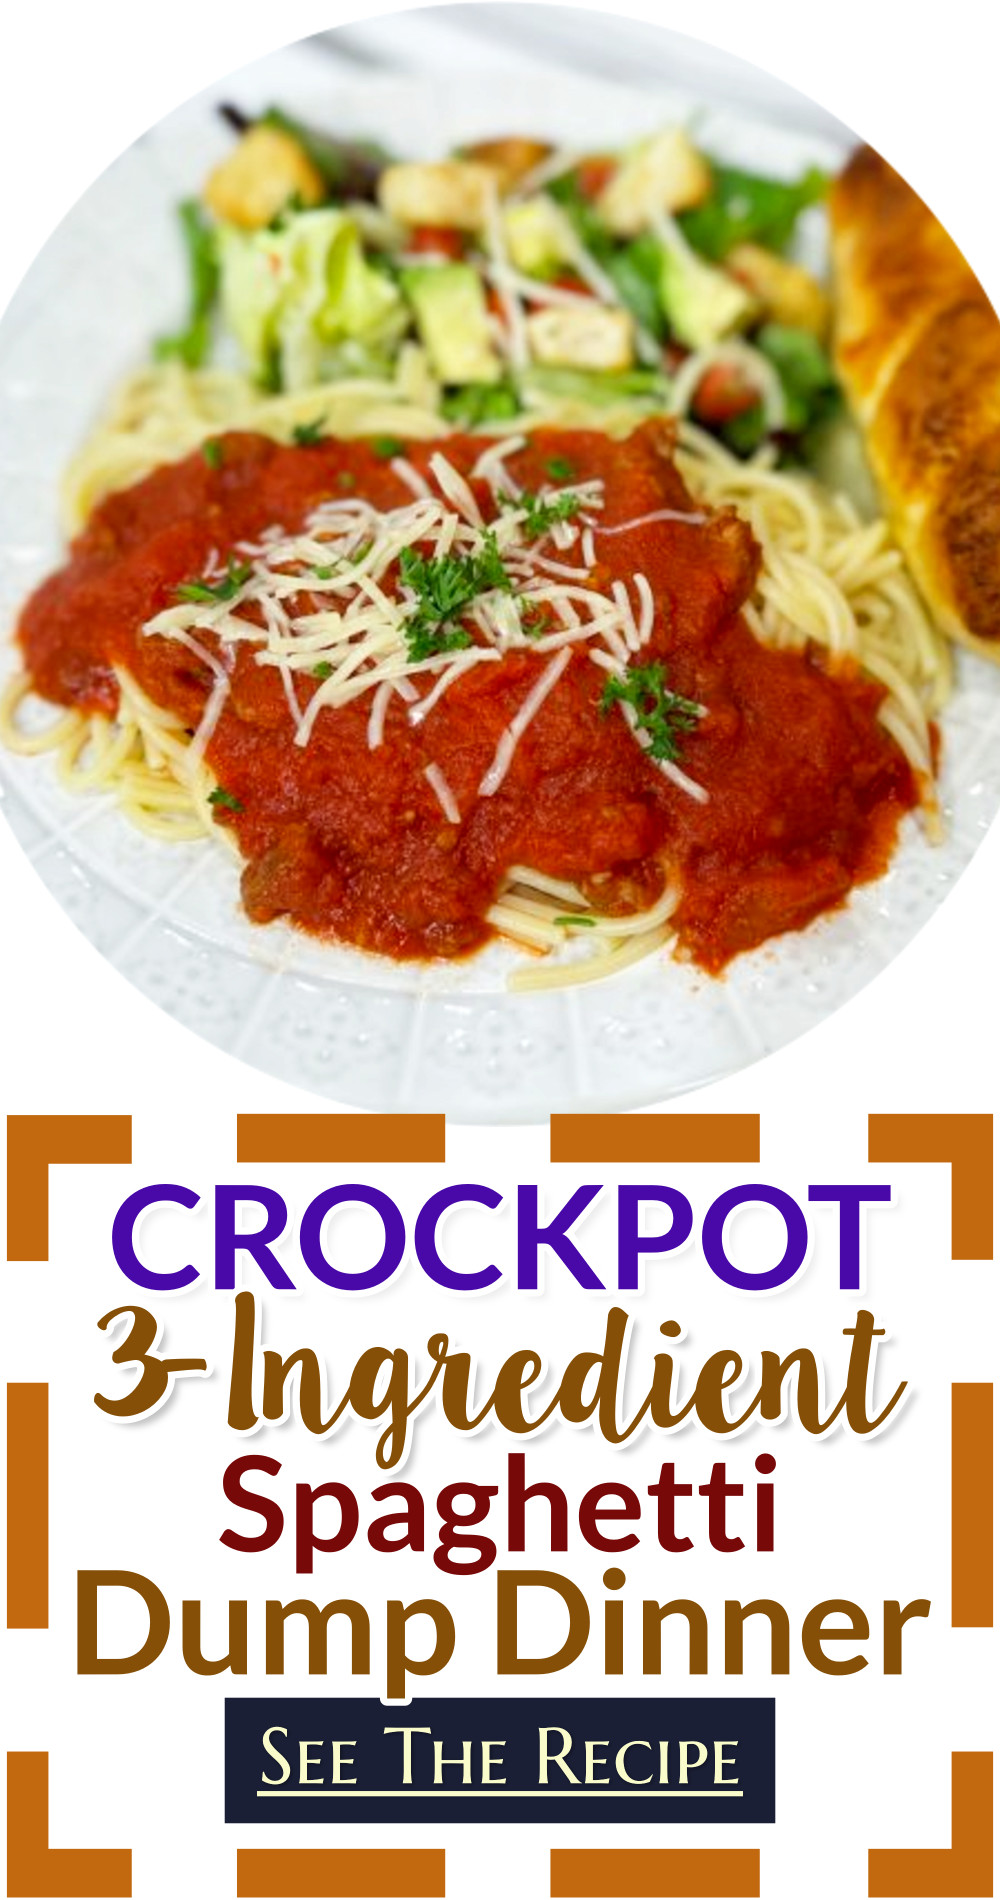 Crockpot 3-Ingredient Spaghetti Dump Dinner Recipe